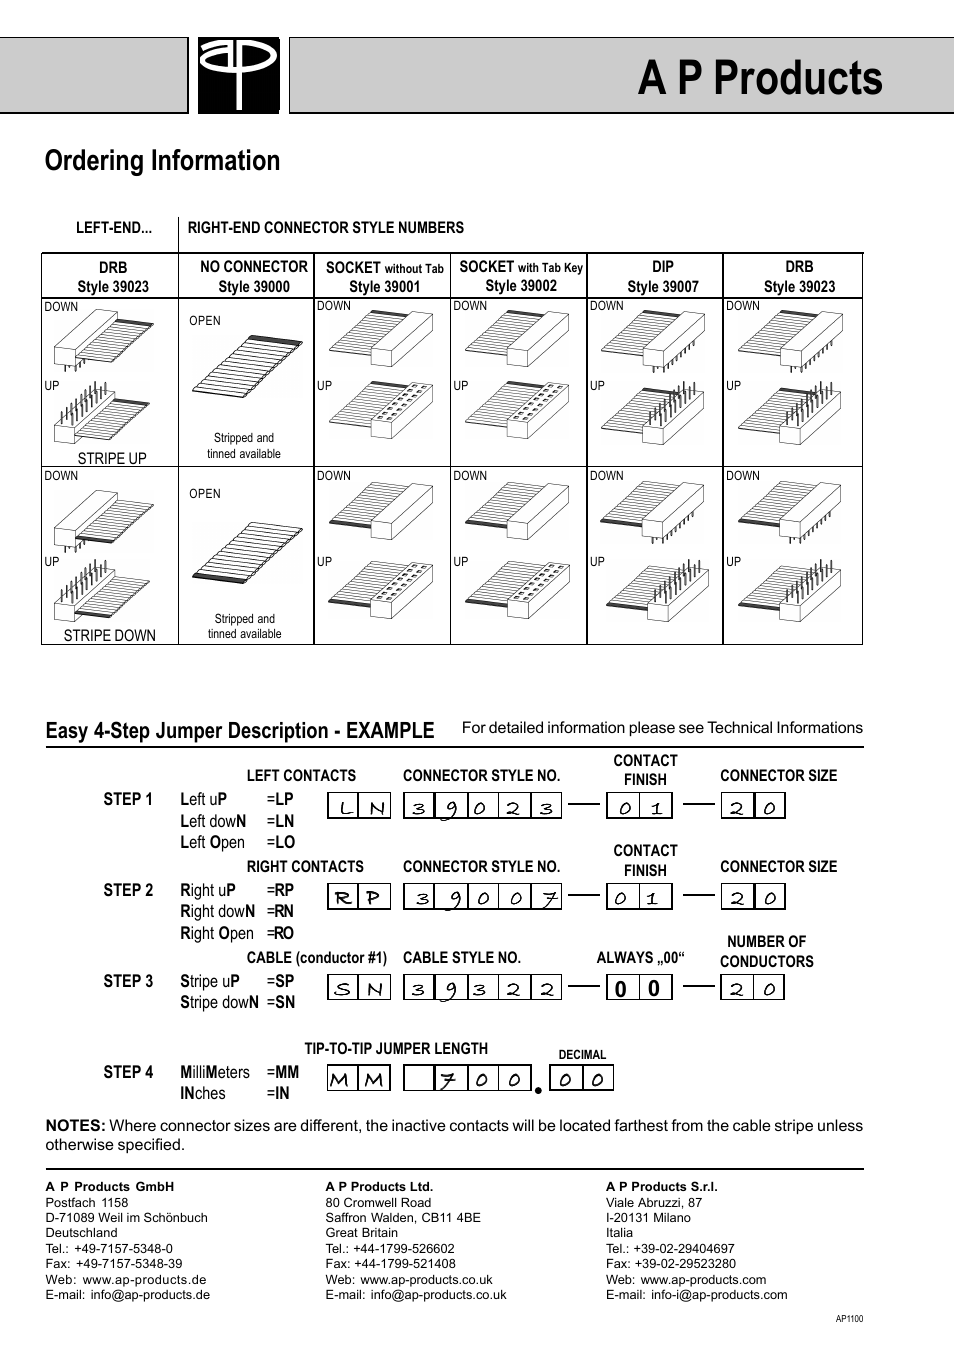 DRB (Dual-Row-Board) Jumper (Page 2)